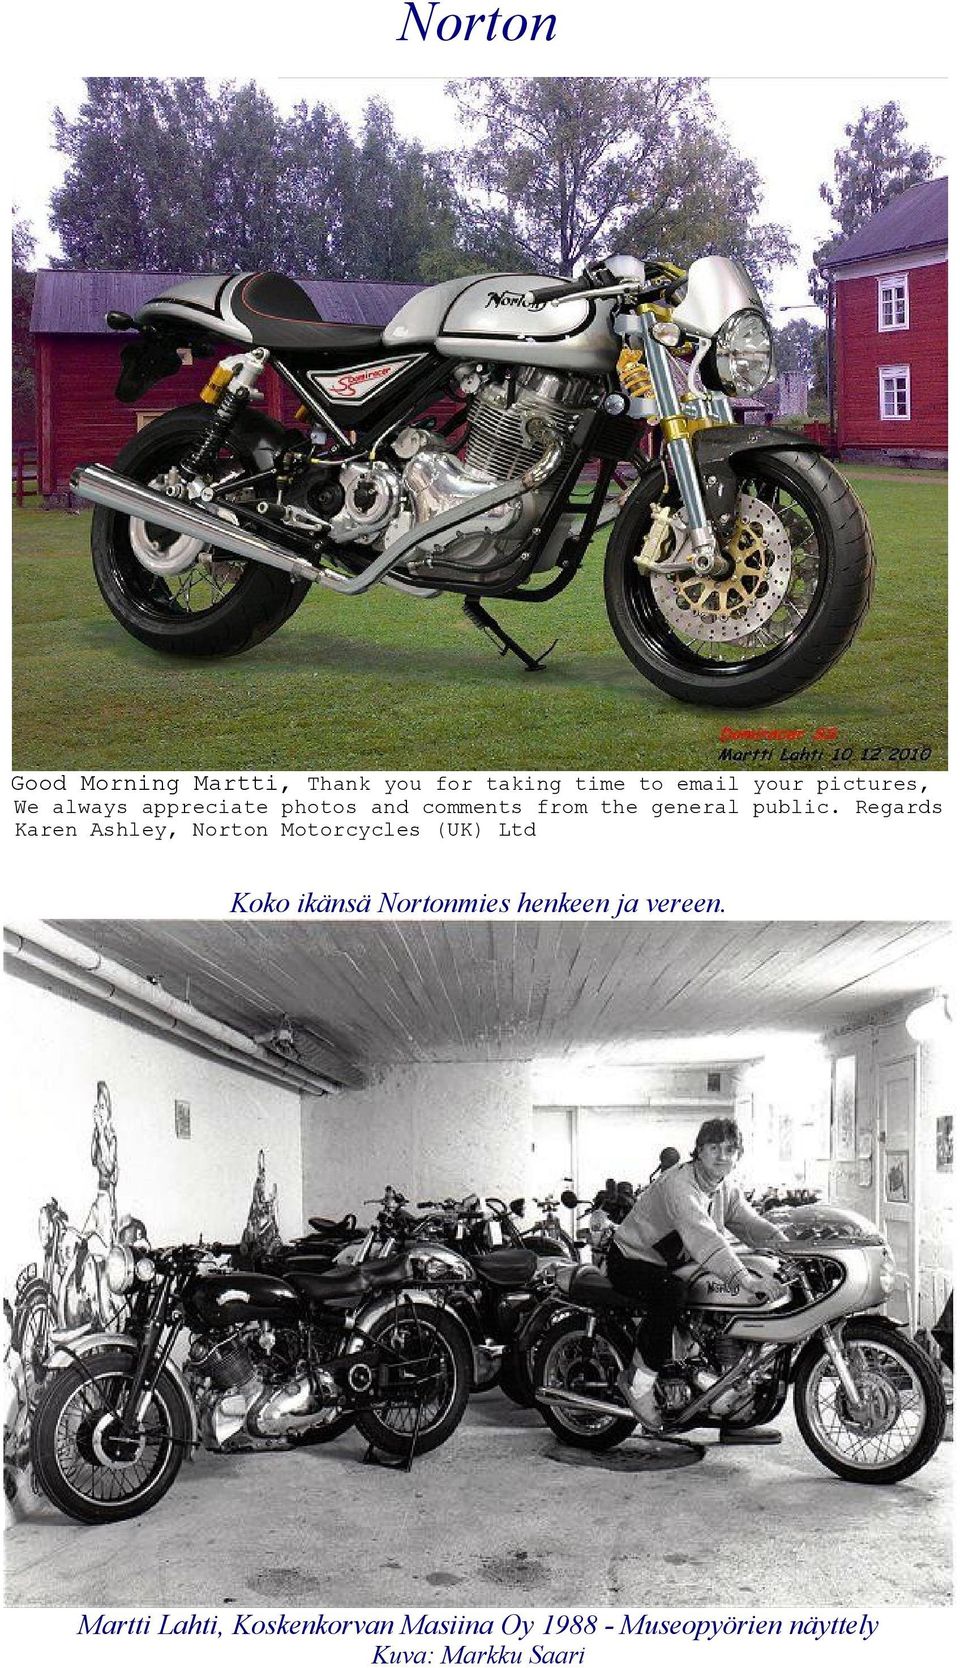 Regards Karen Ashley, Norton Motorcycles (UK) Ltd Koko ikänsä Nortonmies henkeen